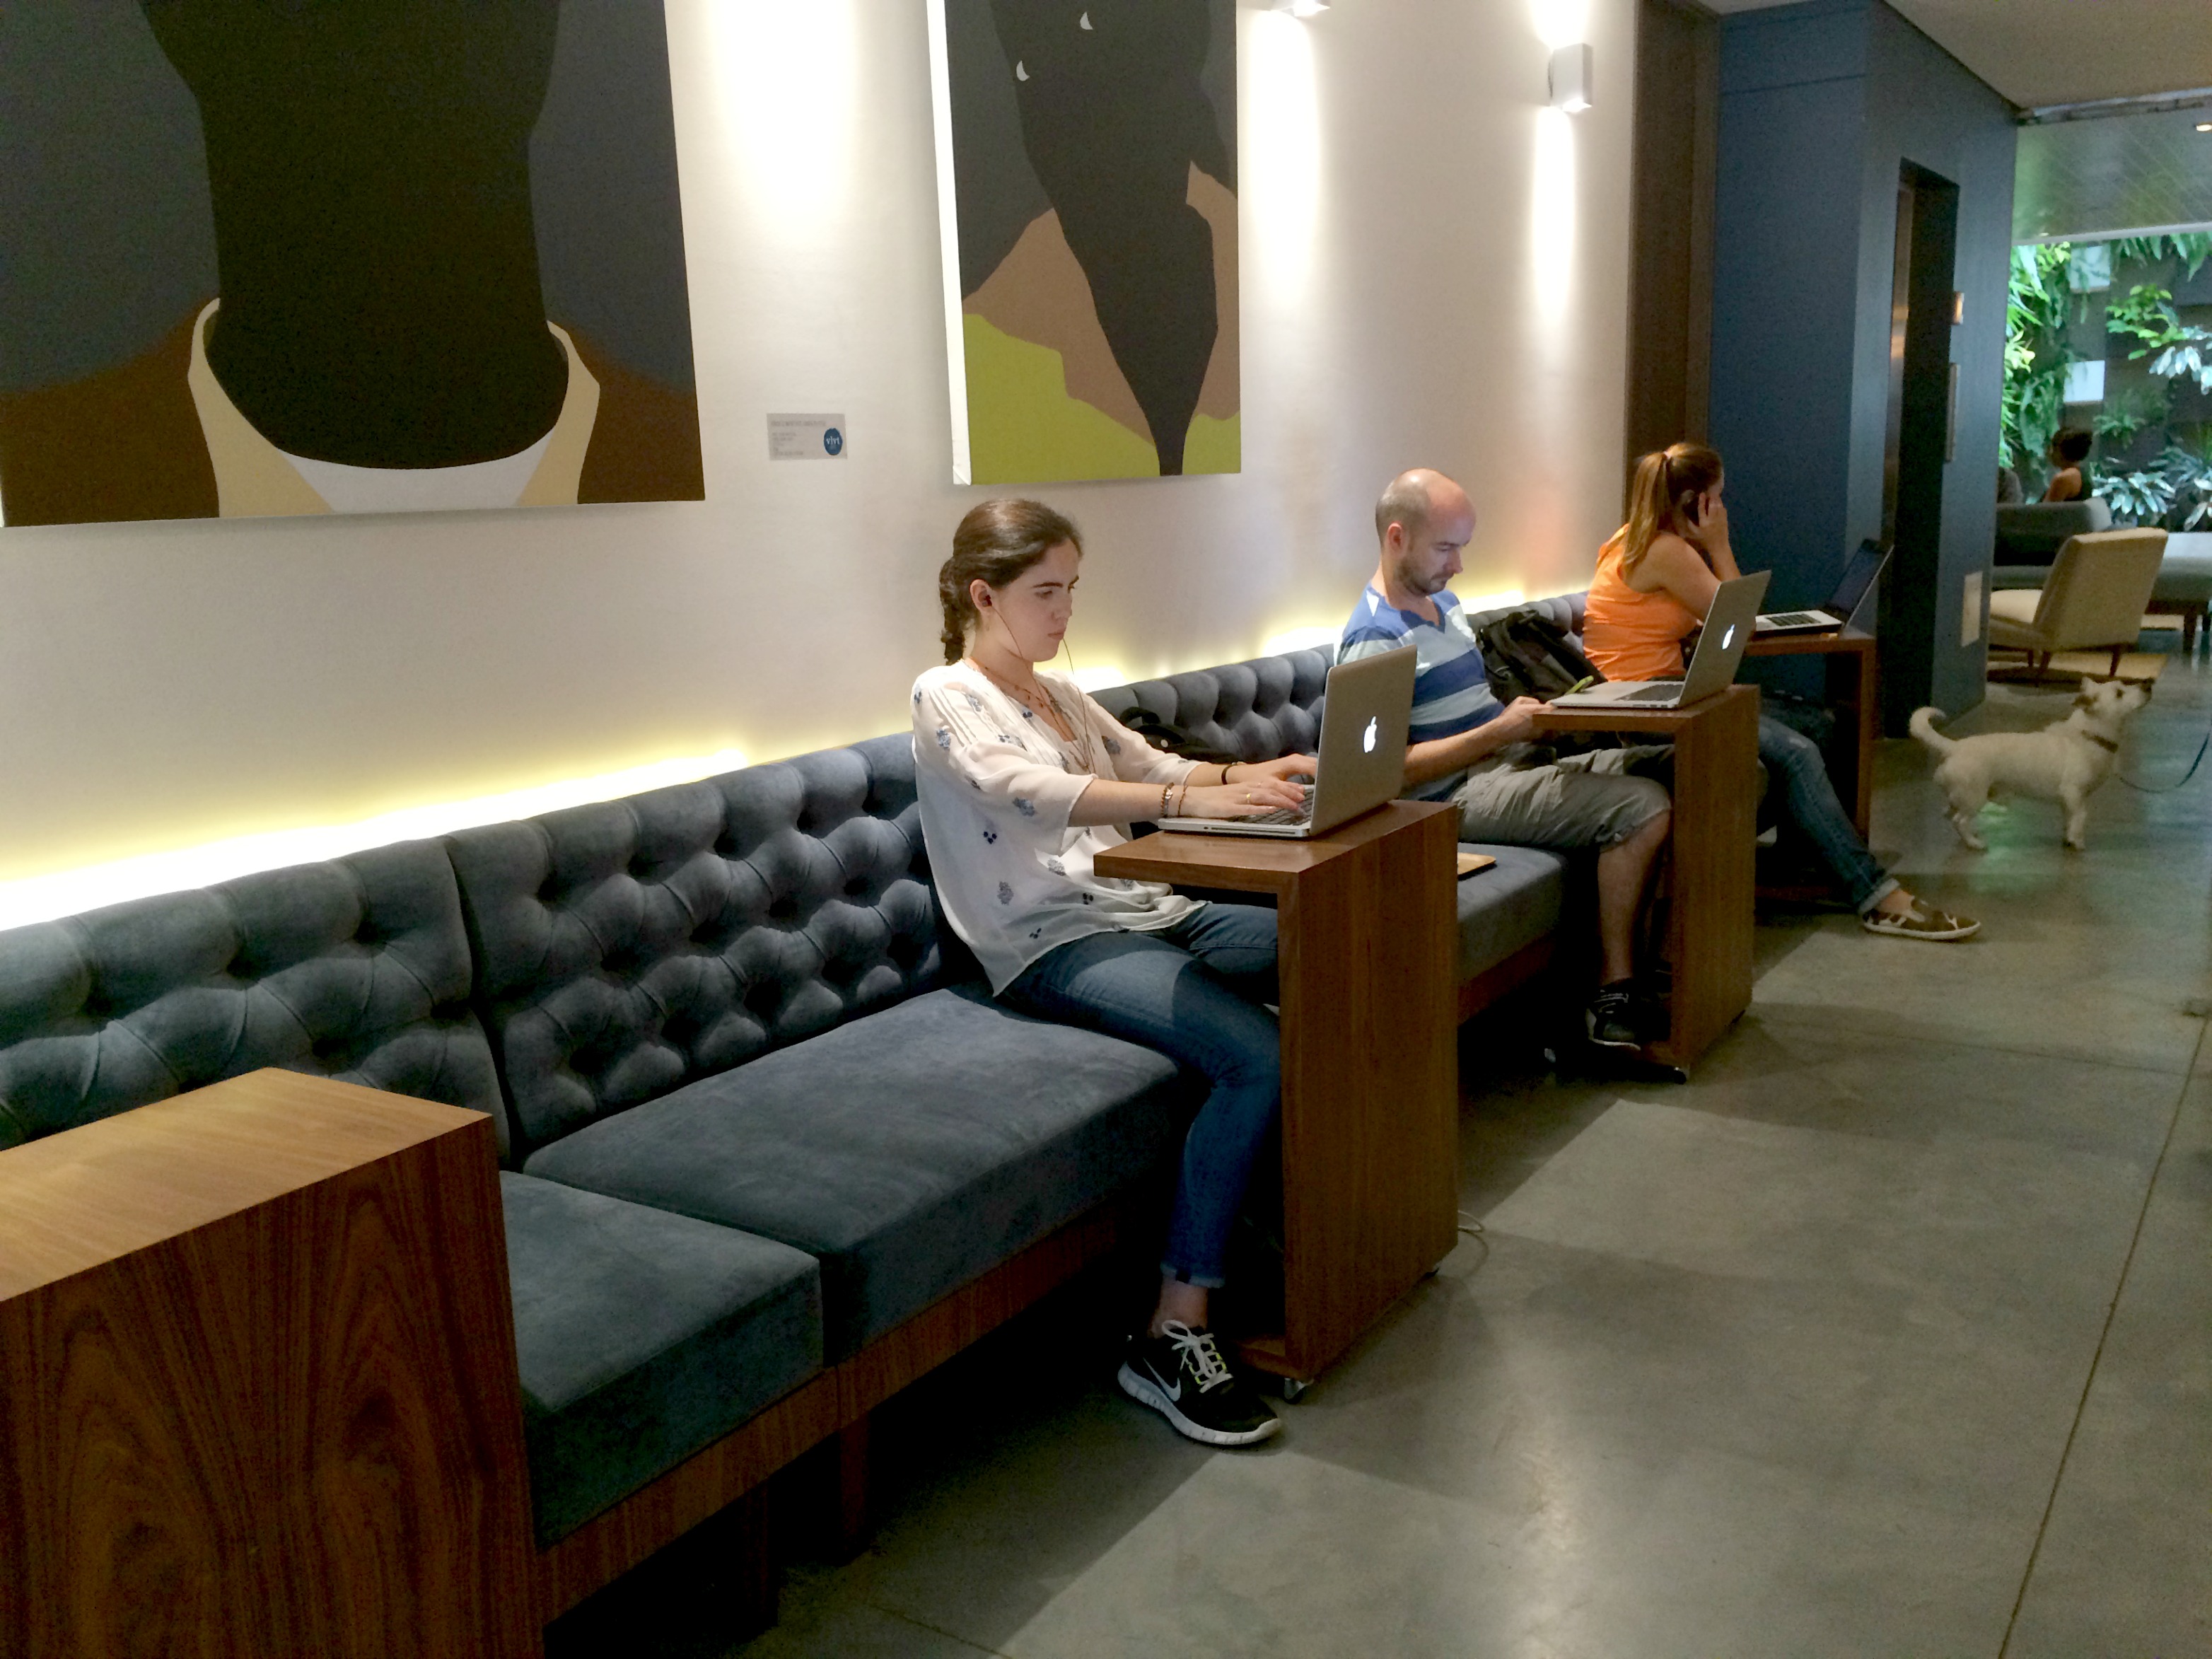 Medellin resources: Great wifi at Cafe Velvet, Medellin, Colombia